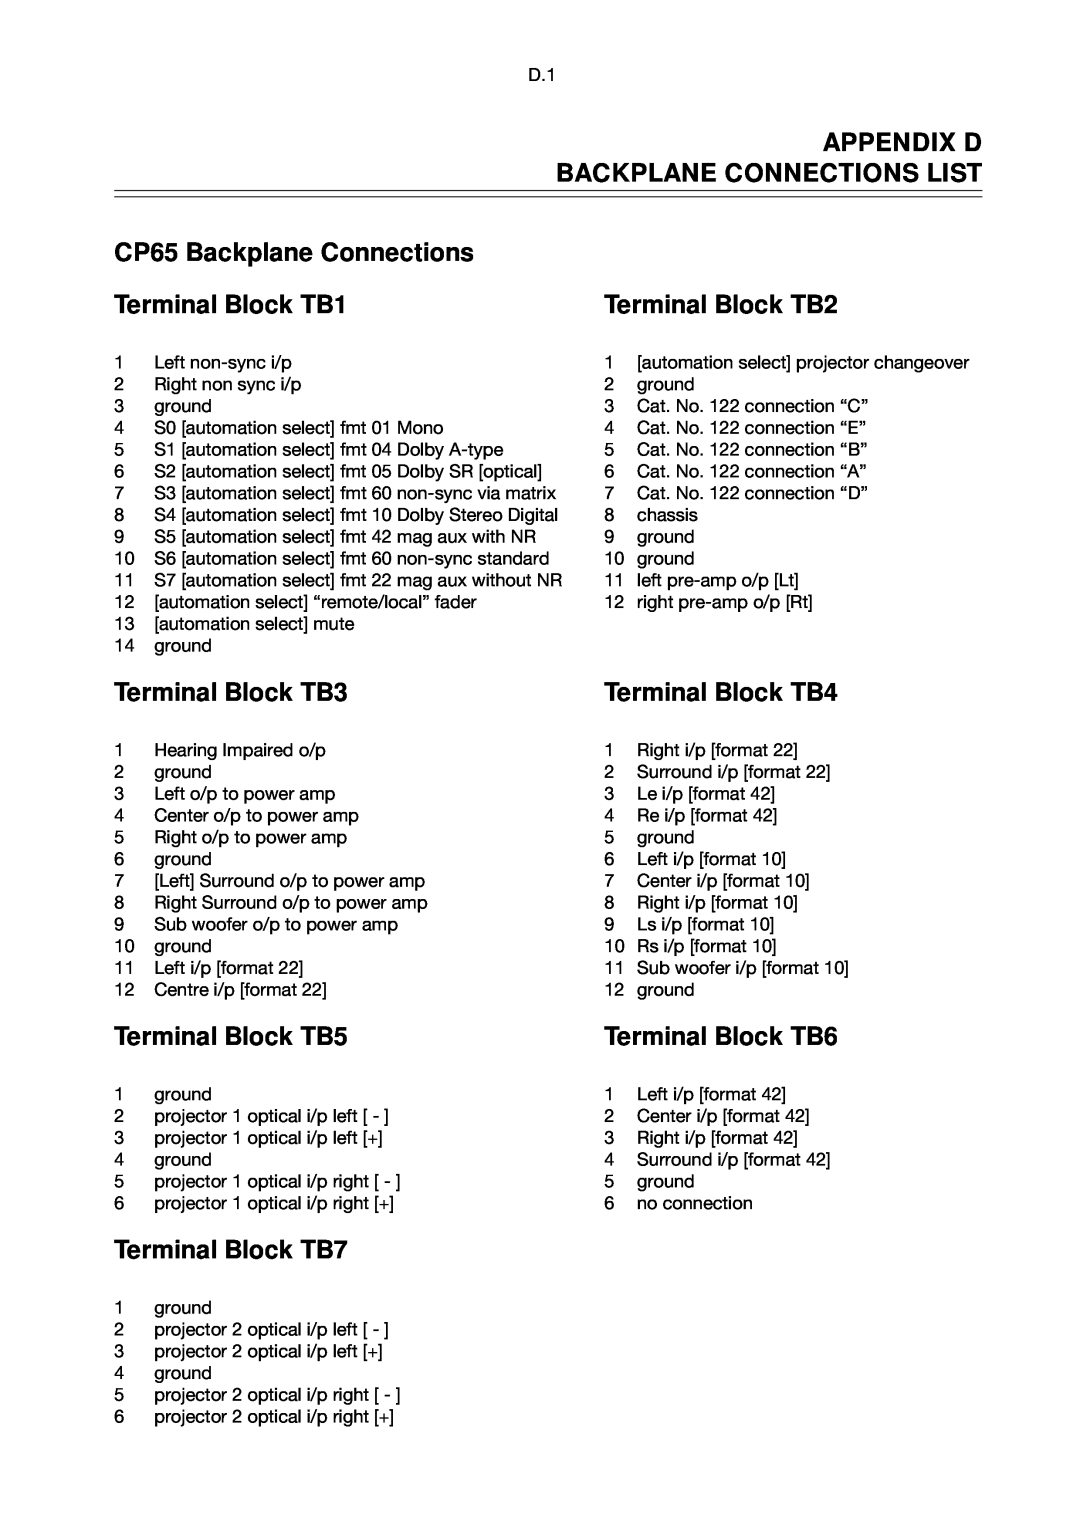 Dolby Laboratories manual Appendix D Backplane Connections List, CP65 Backplane Connections, Terminal Block TB1 